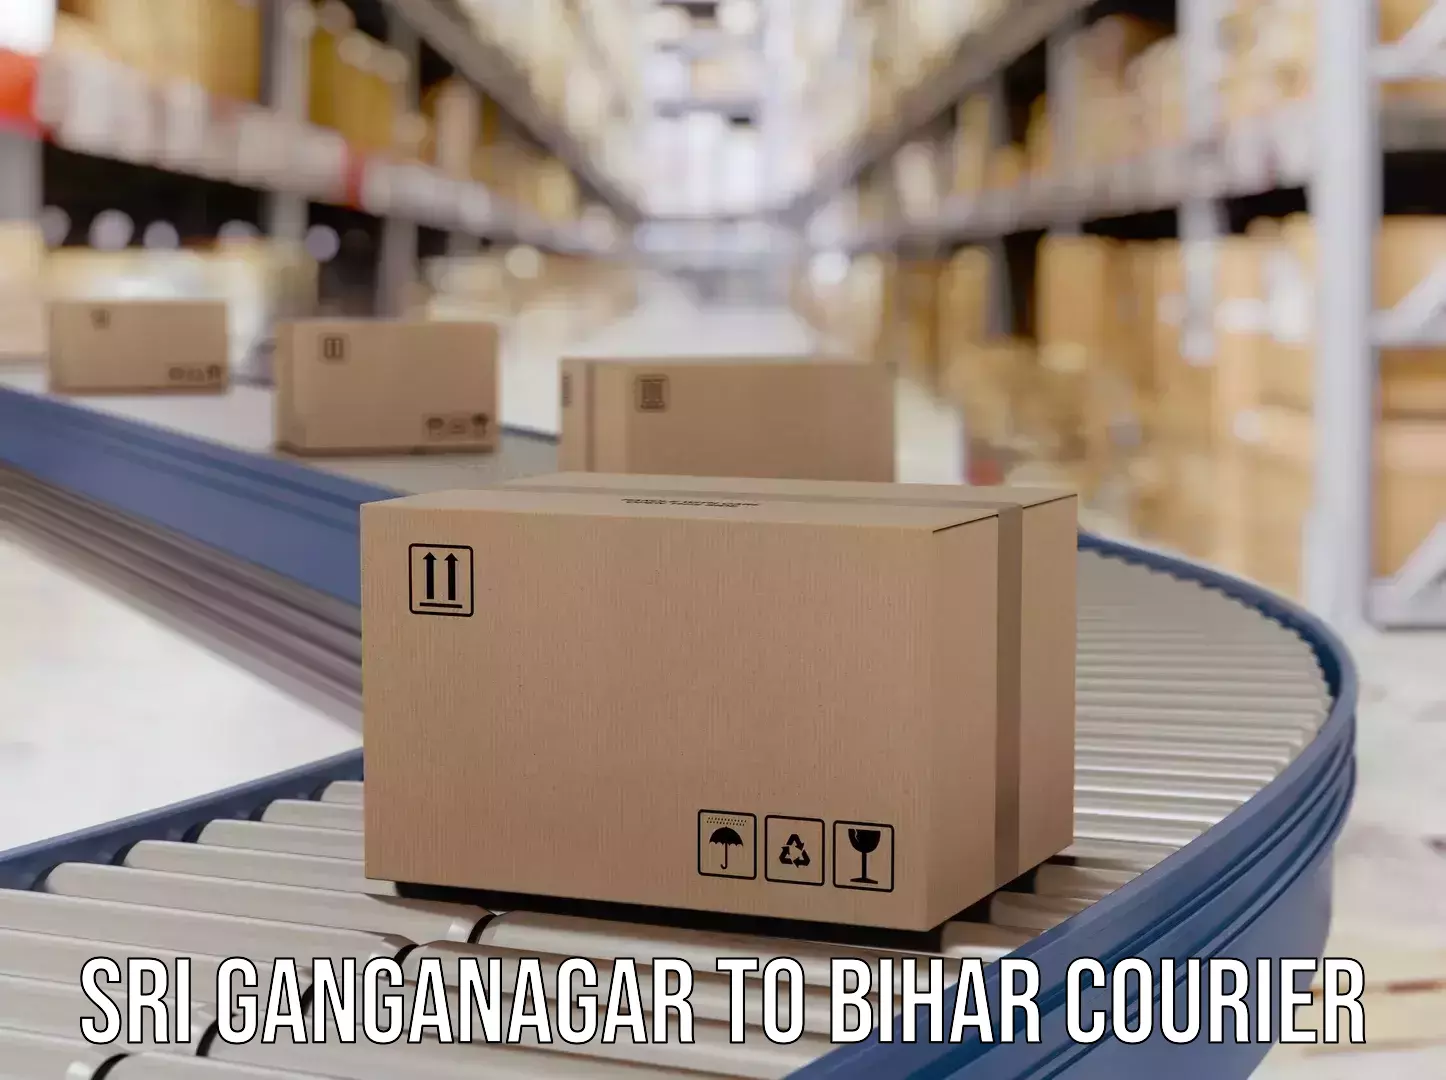 Cash on delivery service Sri Ganganagar to Bihar